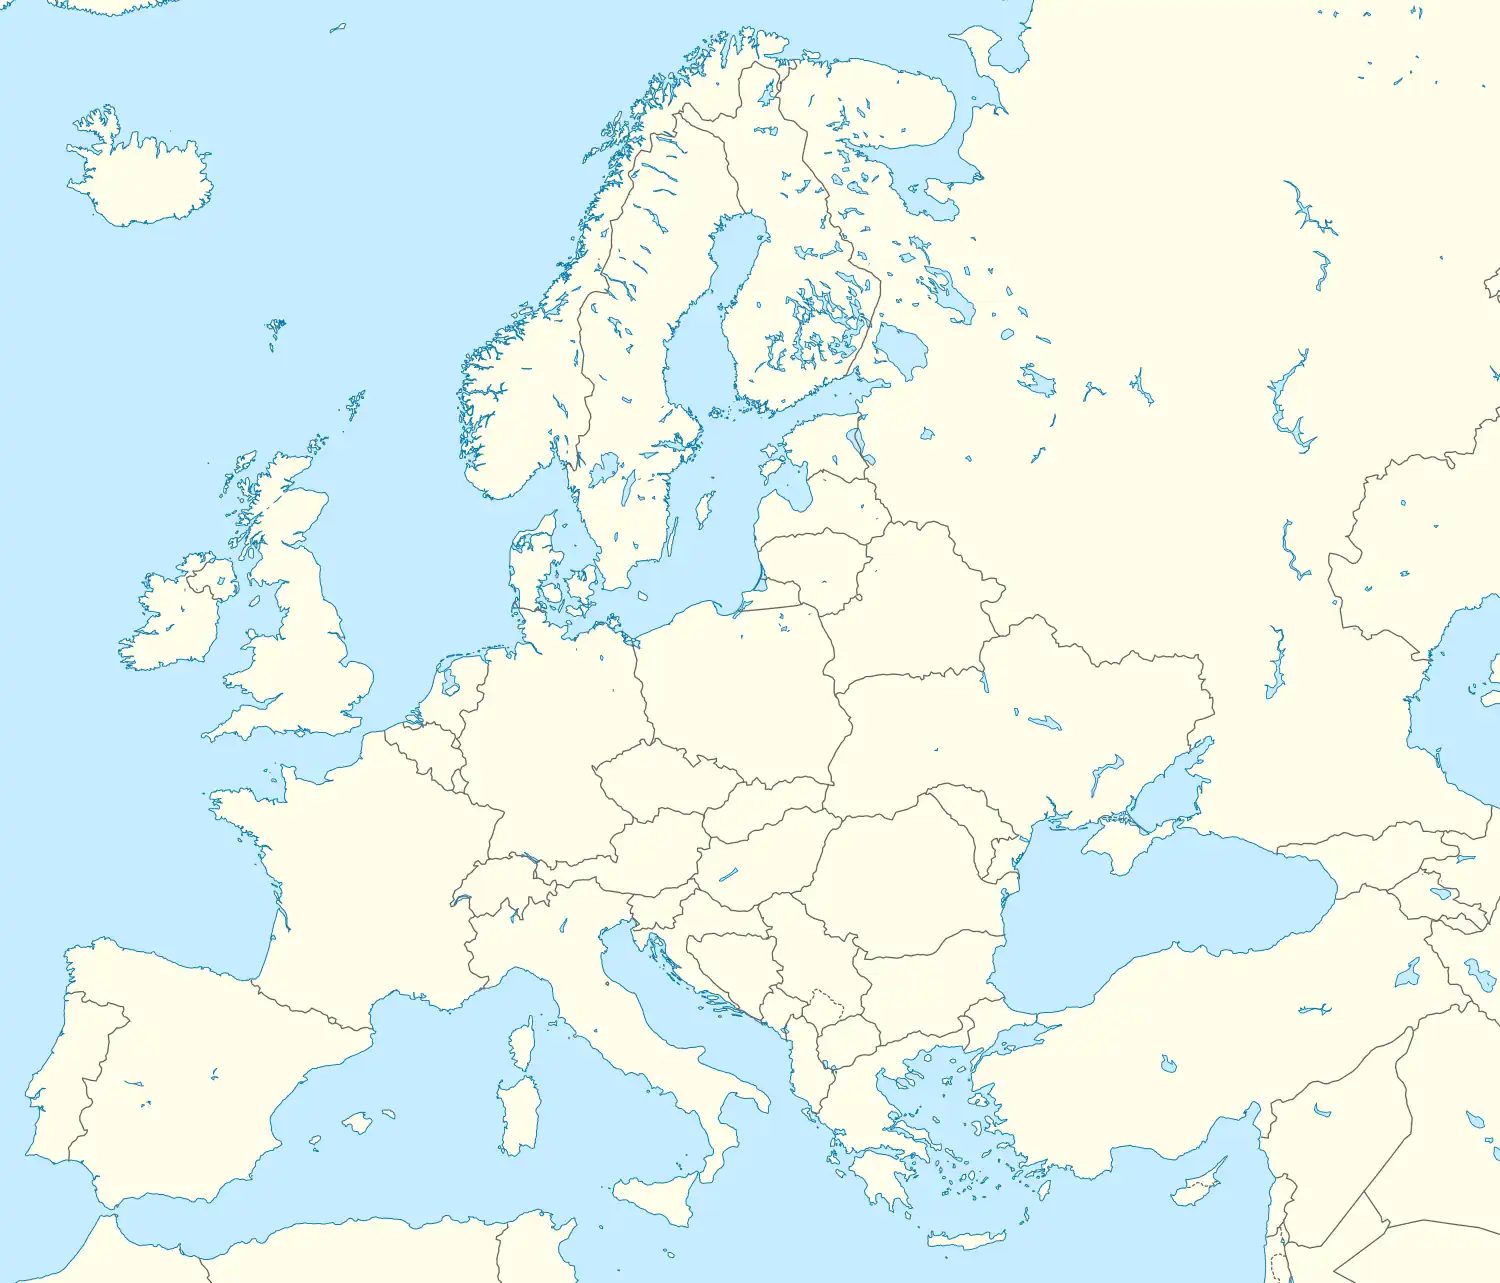 Čonoplja is located in Europe